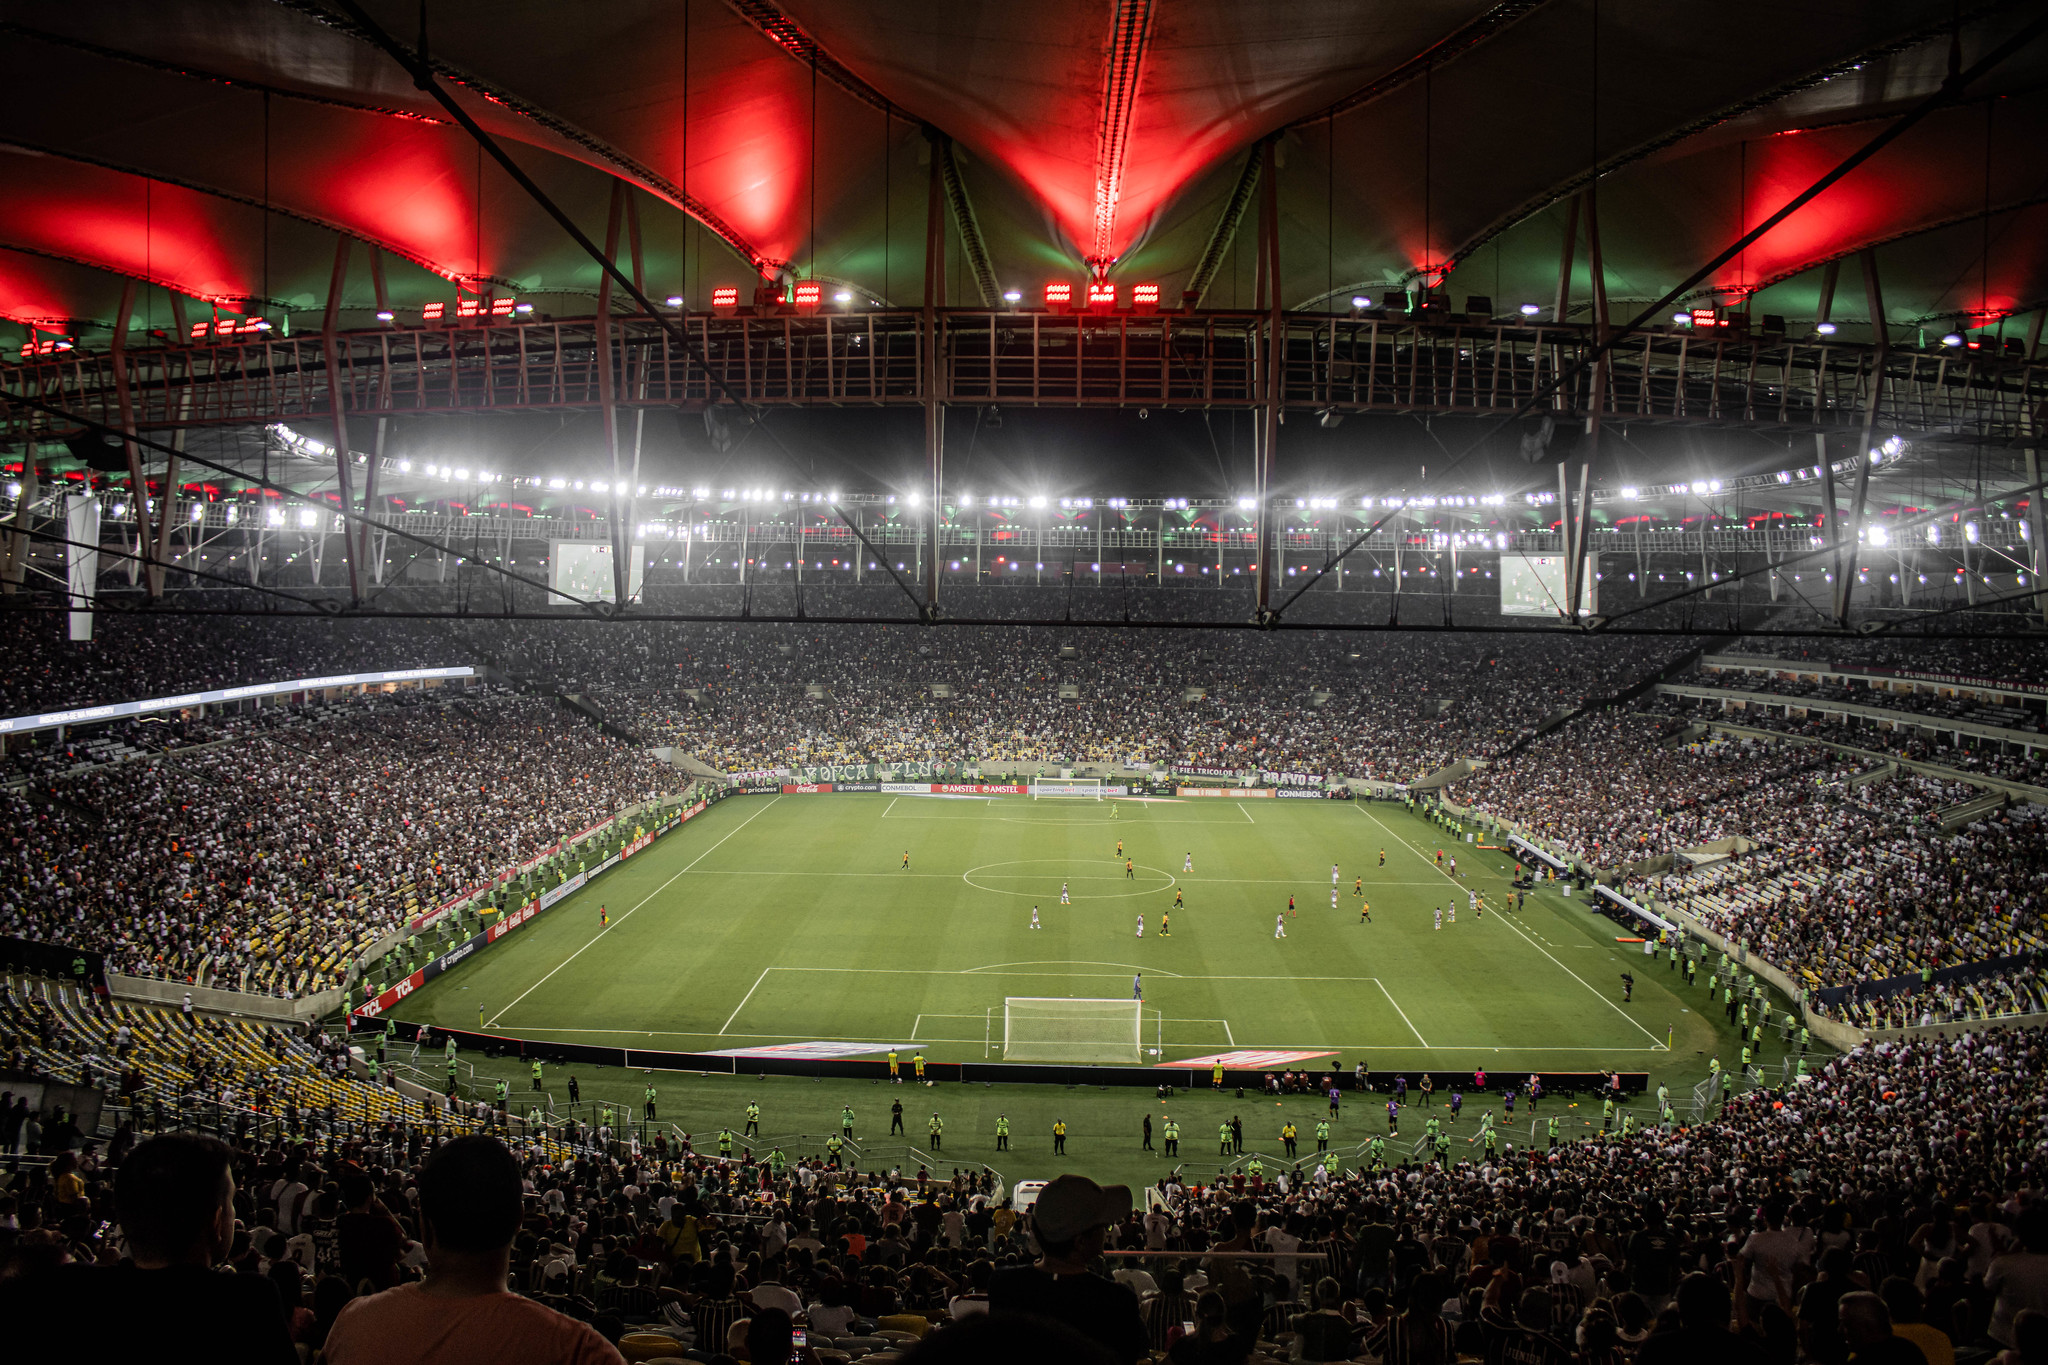 Fluminense 1 x 0 The Strongest: como foi o jogo pela Libertadores